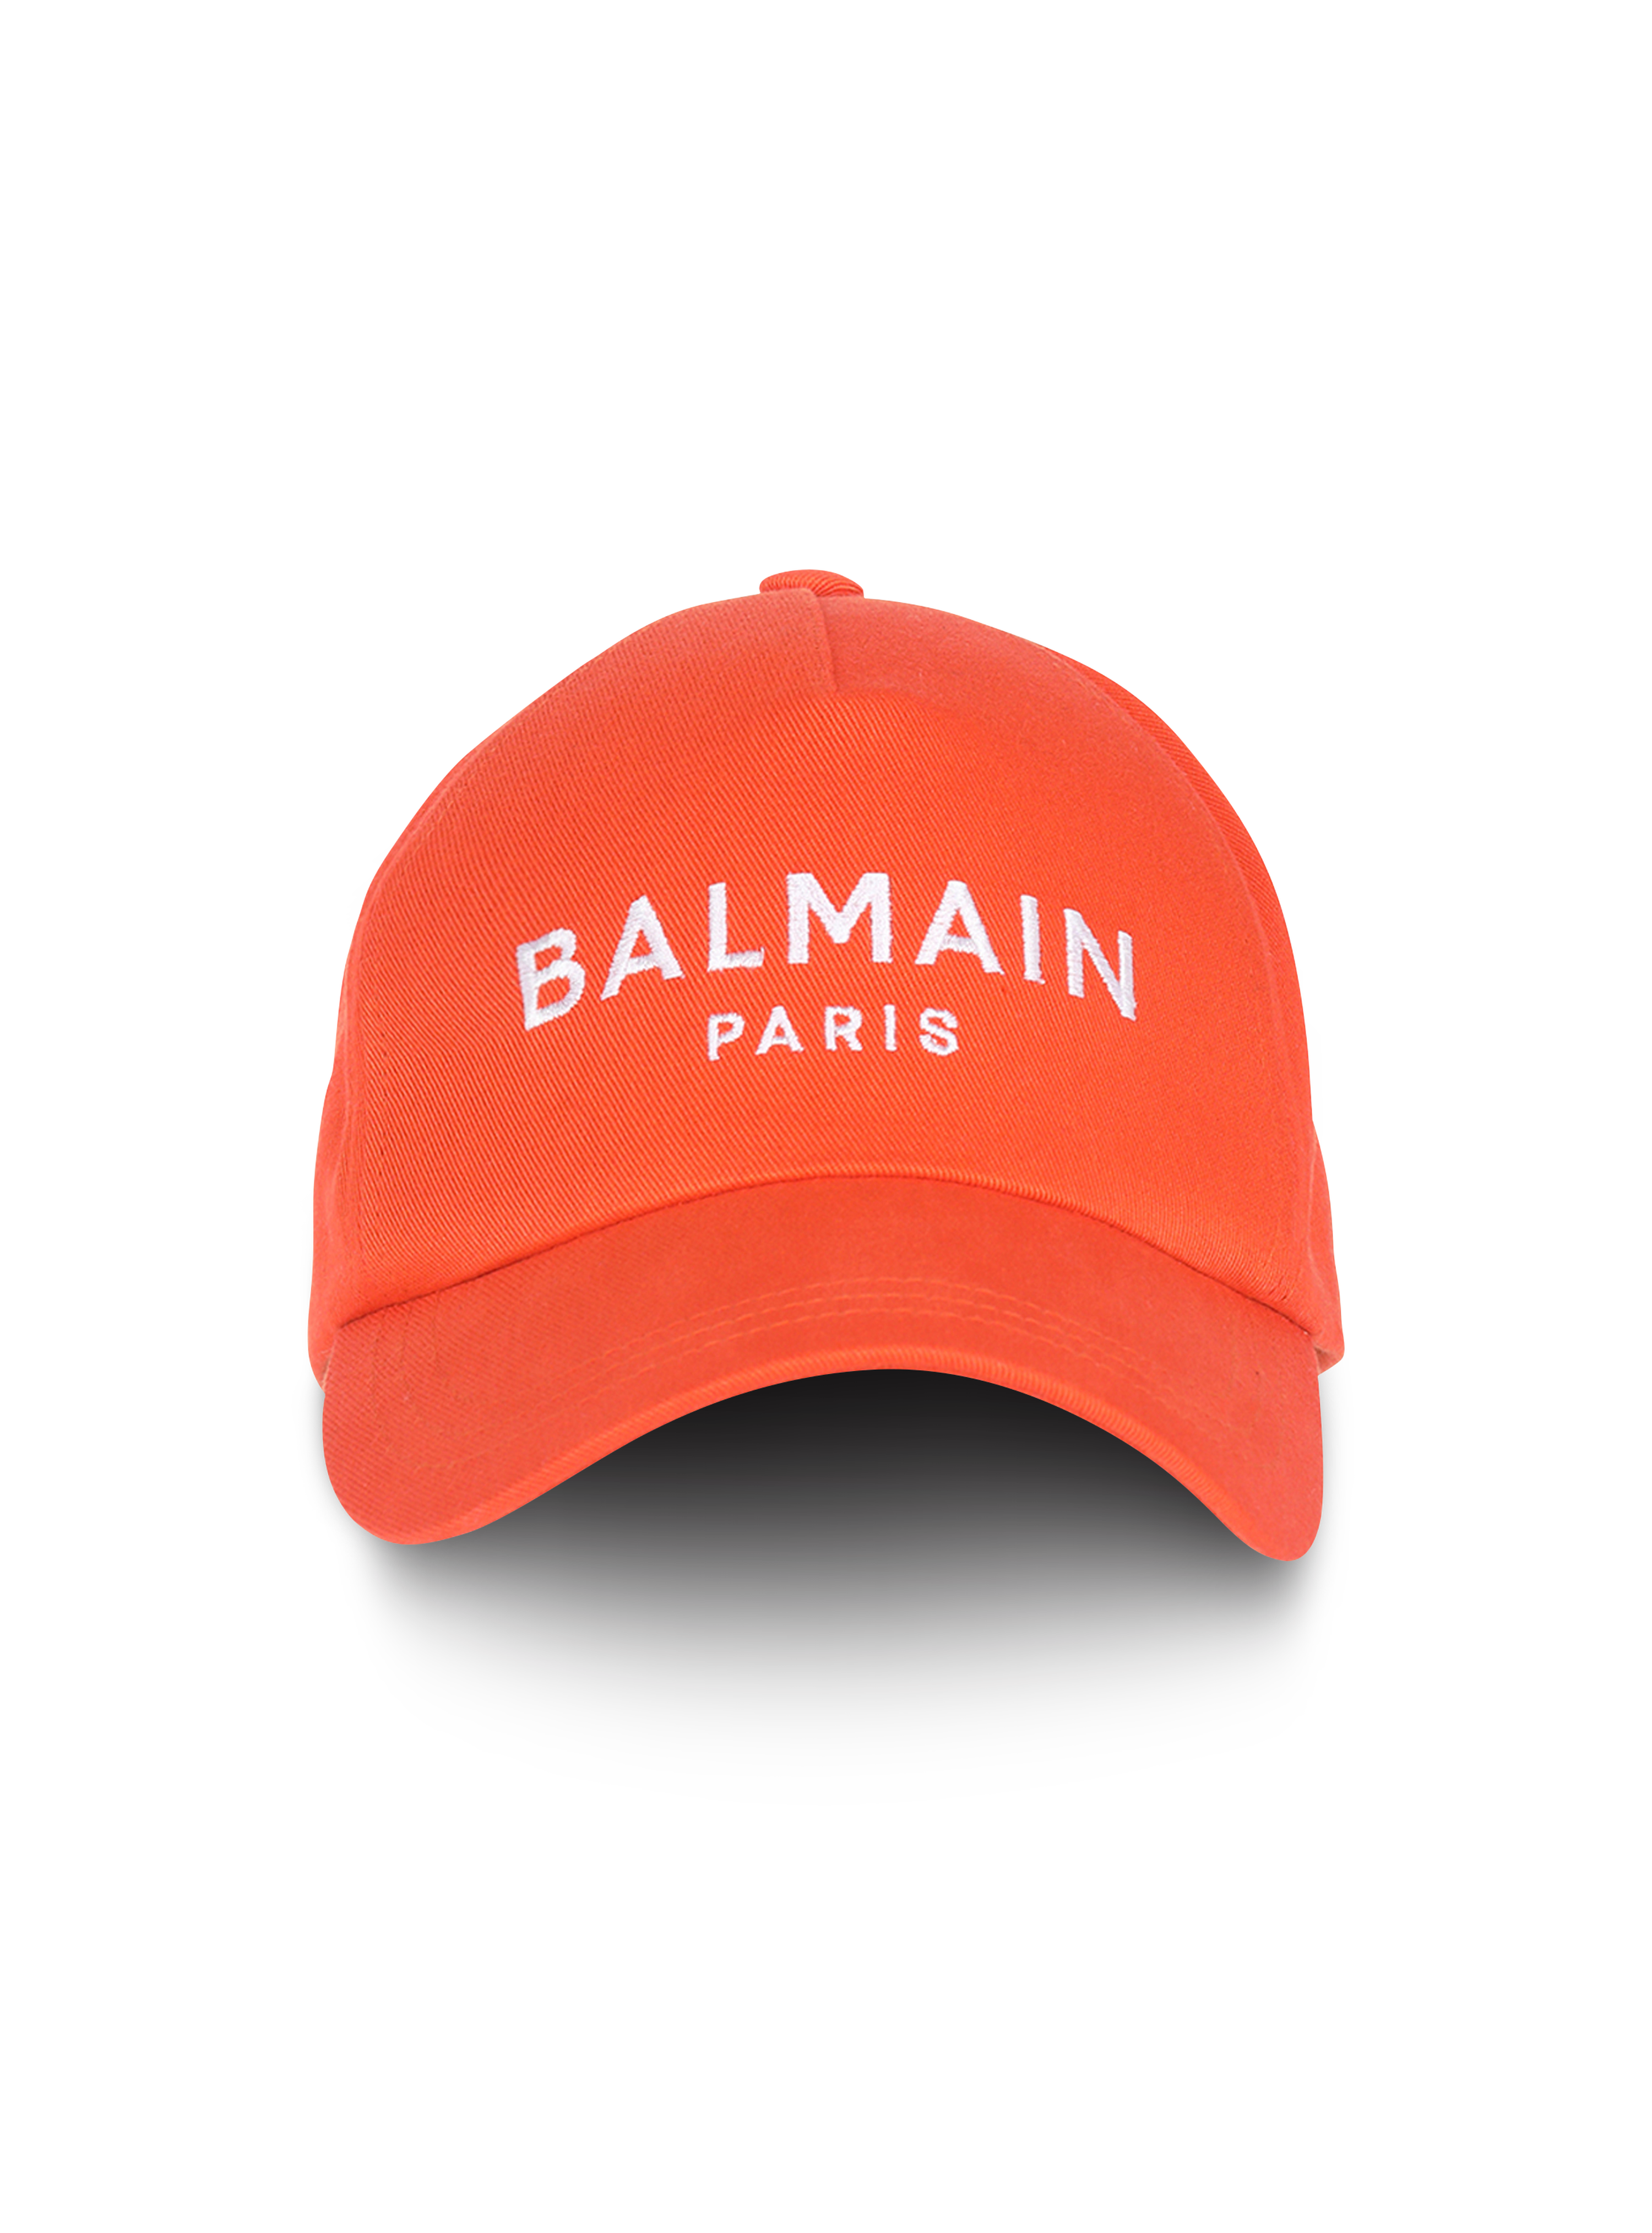 Cotton cap with Balmain logo, orange